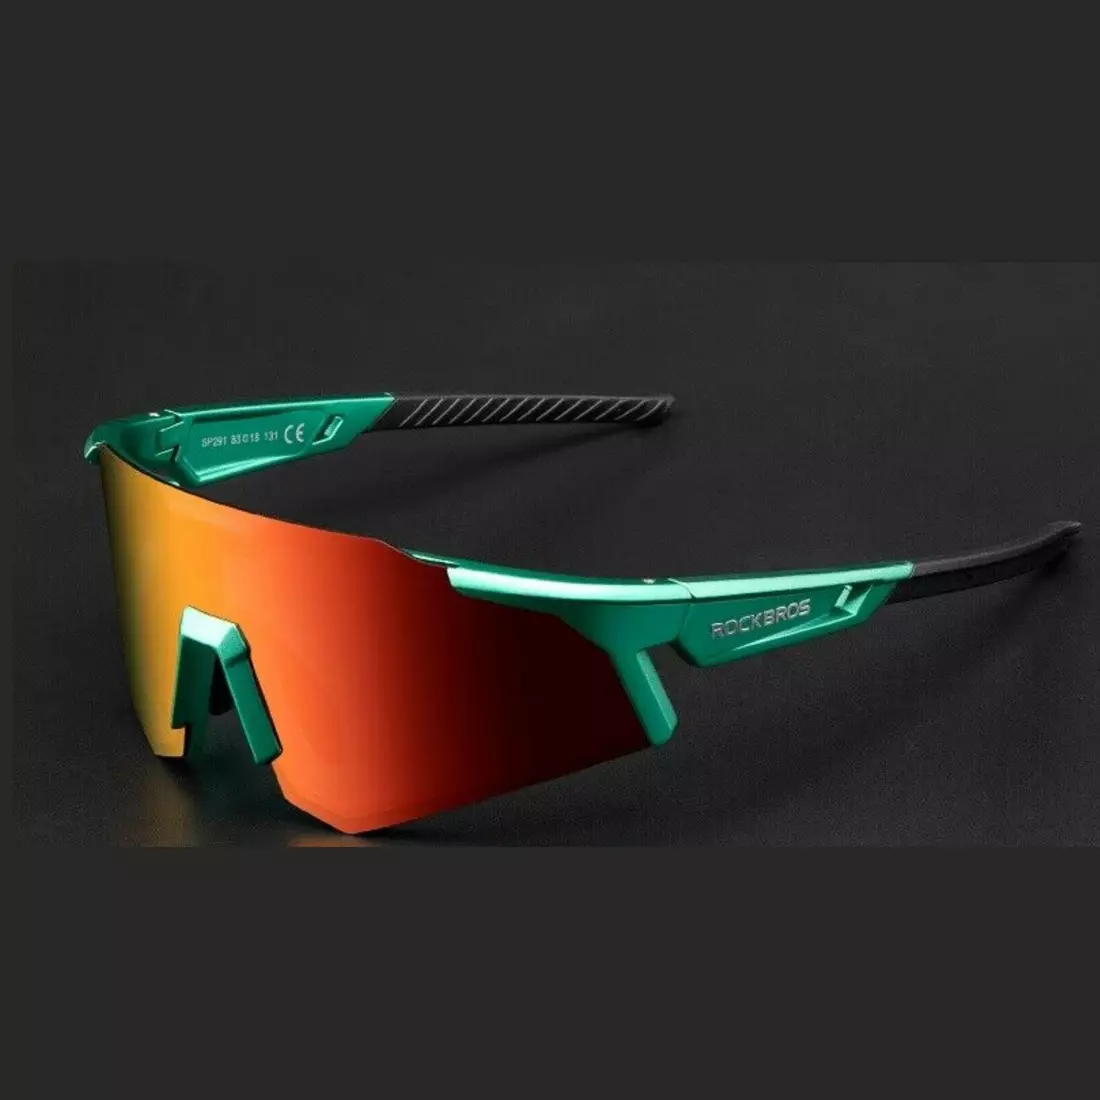 Rockbros 10165 Polarized Cycling Sunglasses - Green - Supage Technology